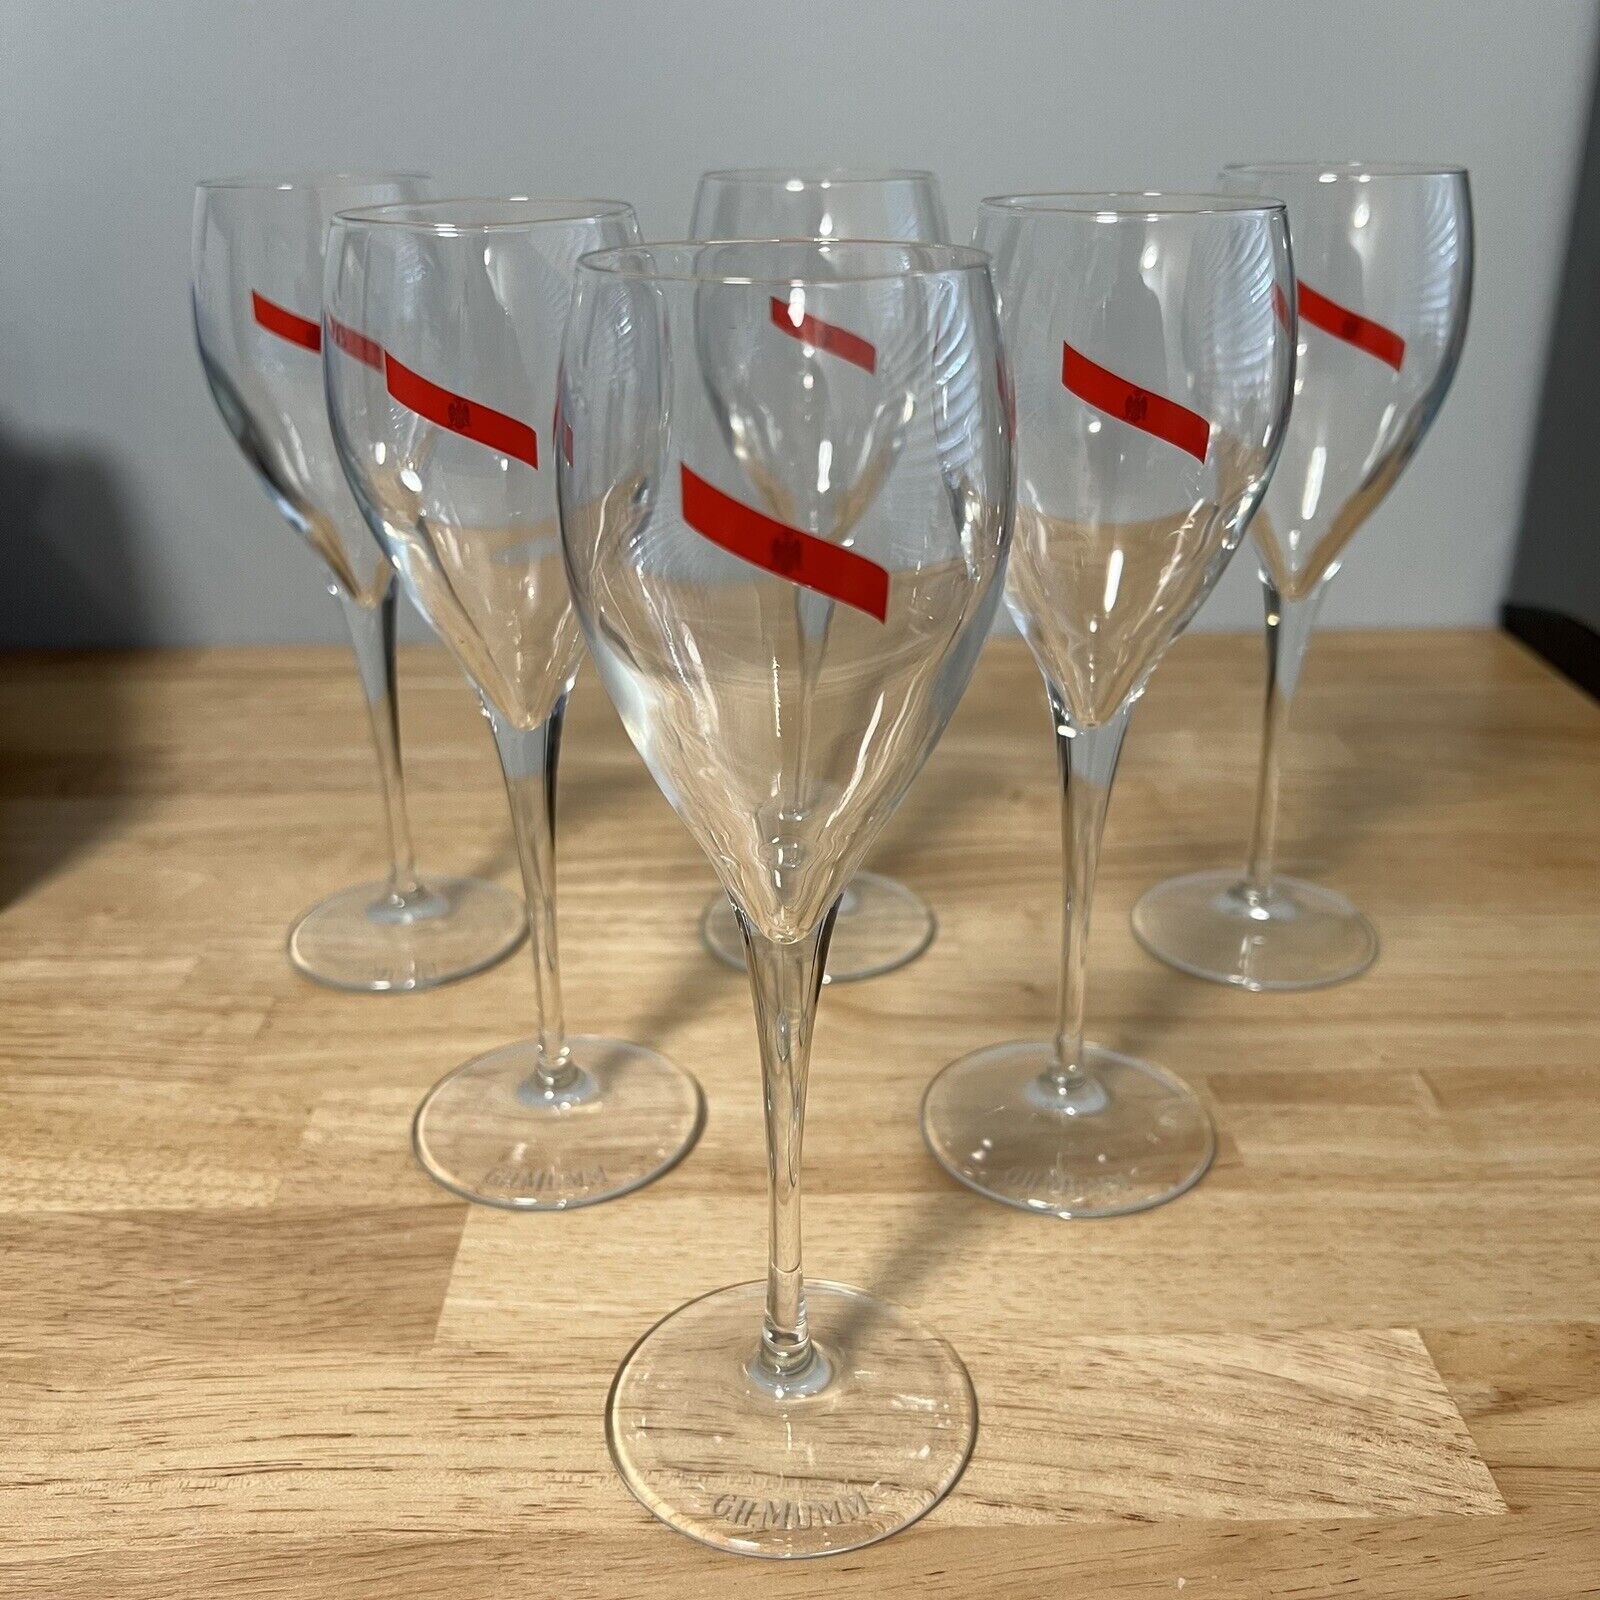 6pc SET GH MUMM Red Ribbon Tulip Shaped 150ml Champagne Prosecco Flutes Glasses